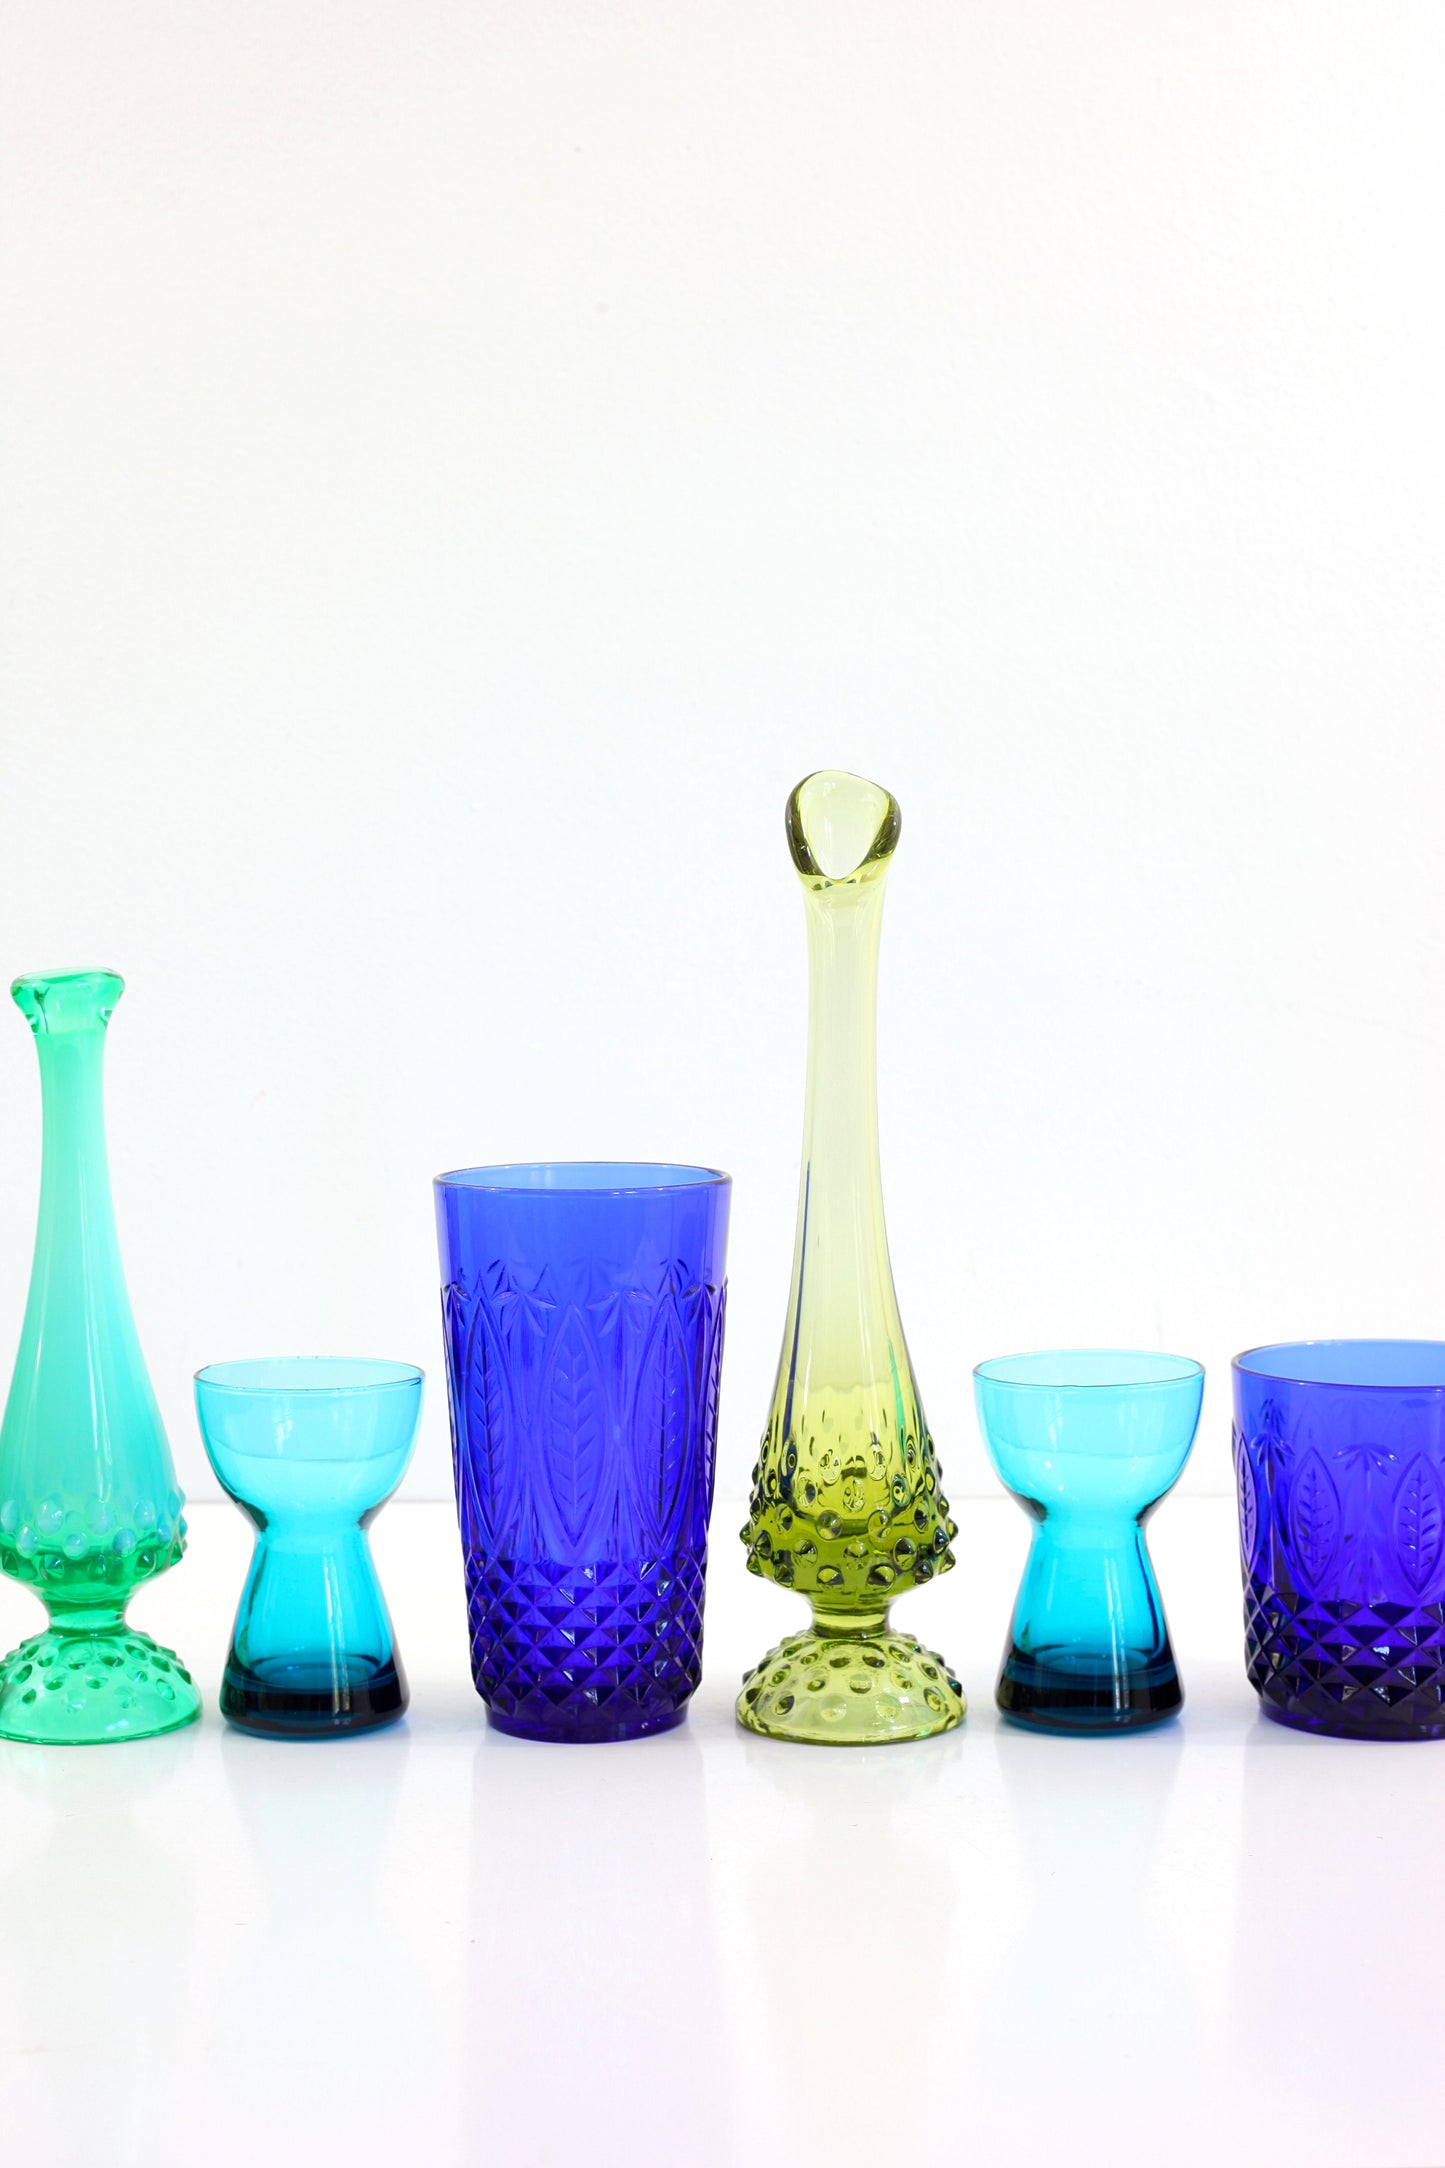 SOLD - Mid Century Modern Green Glass Hobnail Vase